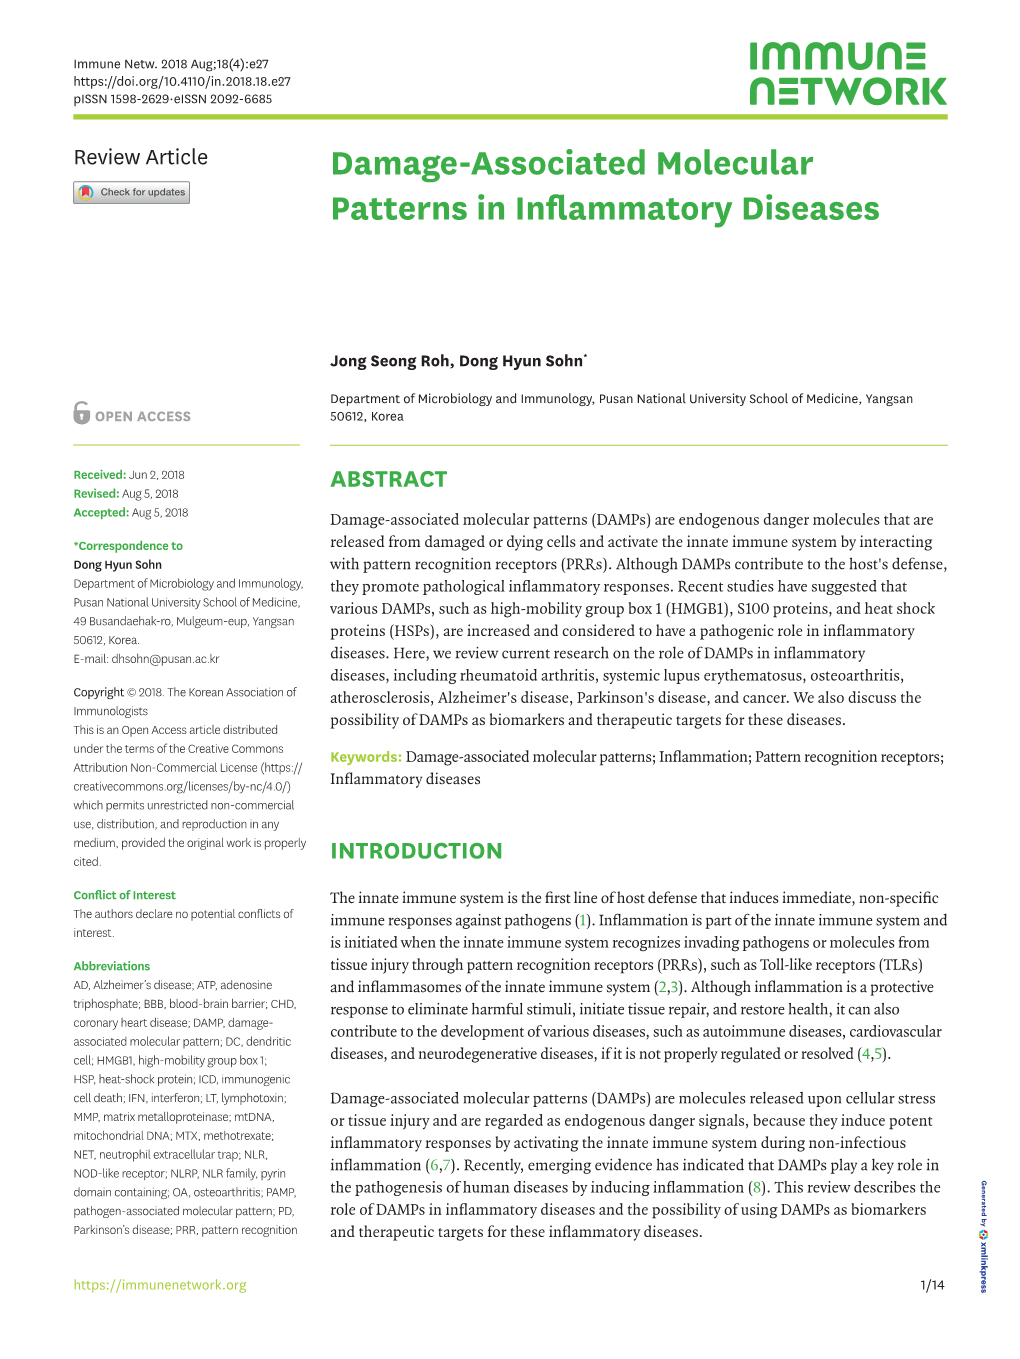 Damage-Associated Molecular Patterns in Inflammatory Diseases